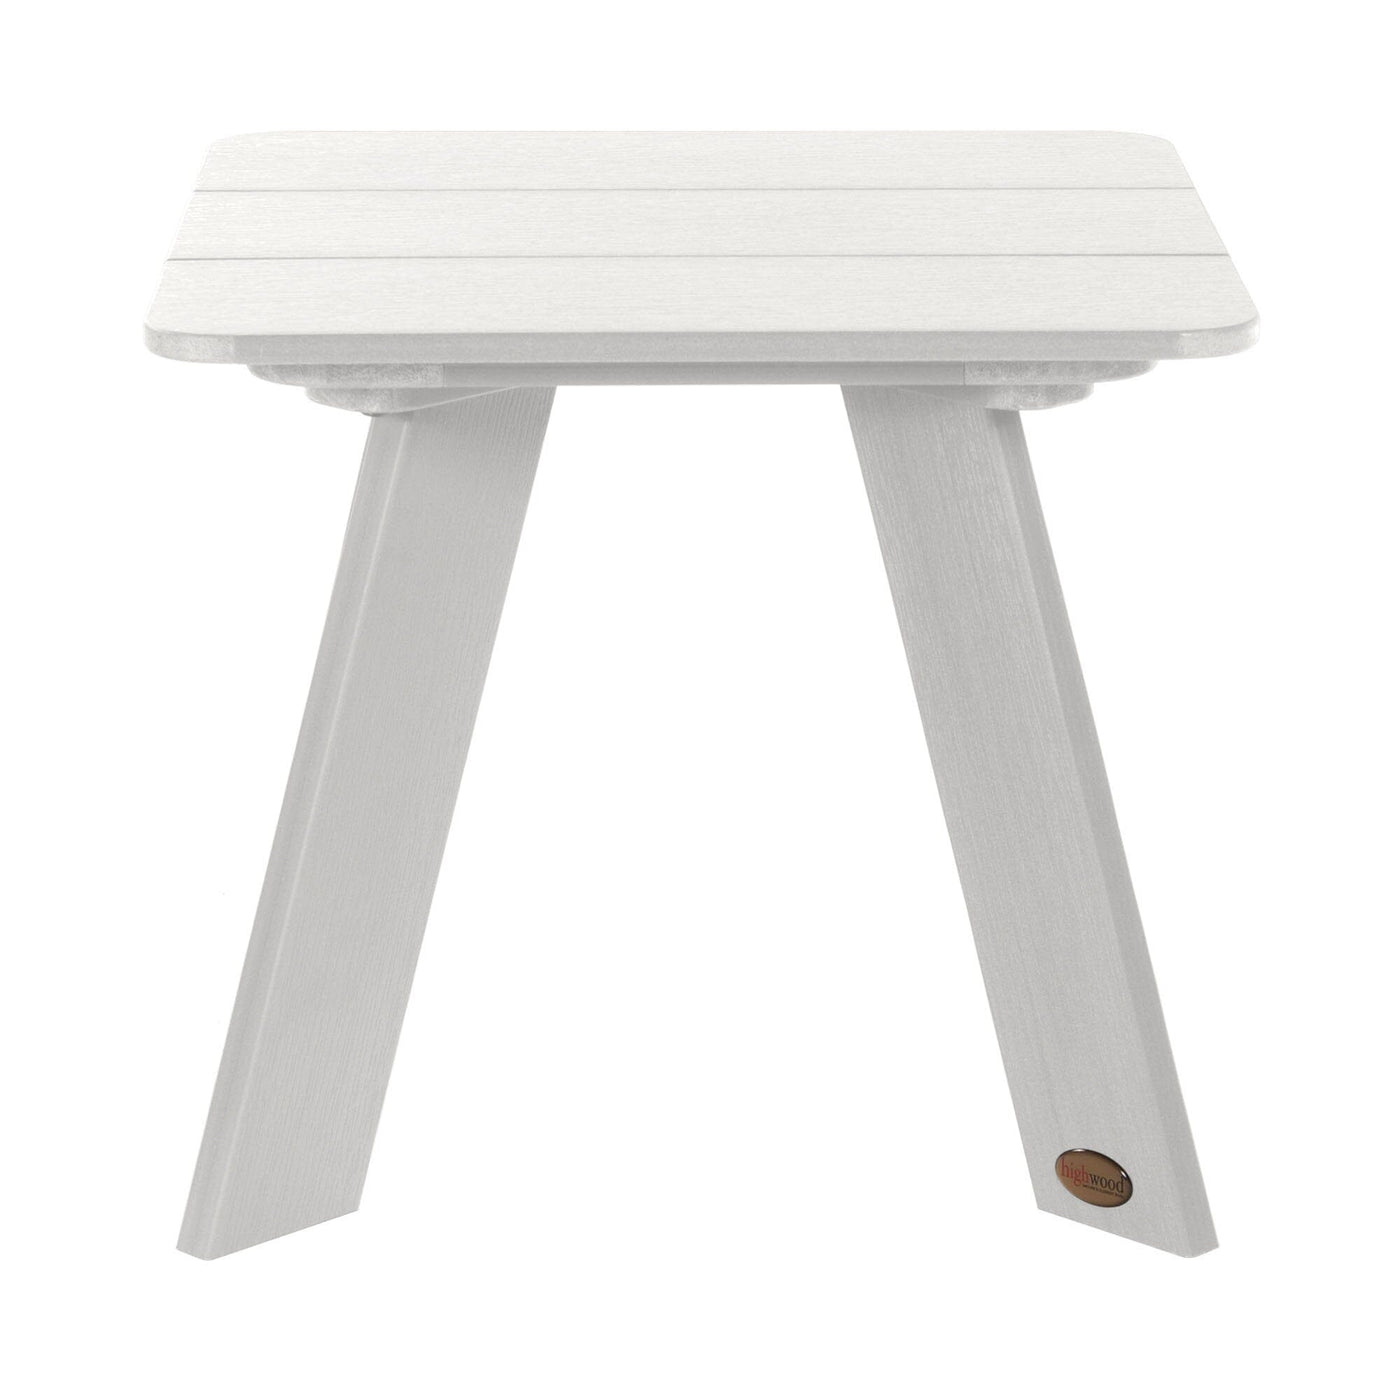 Refurbished Italica Modern Side Table Table Highwood USA 